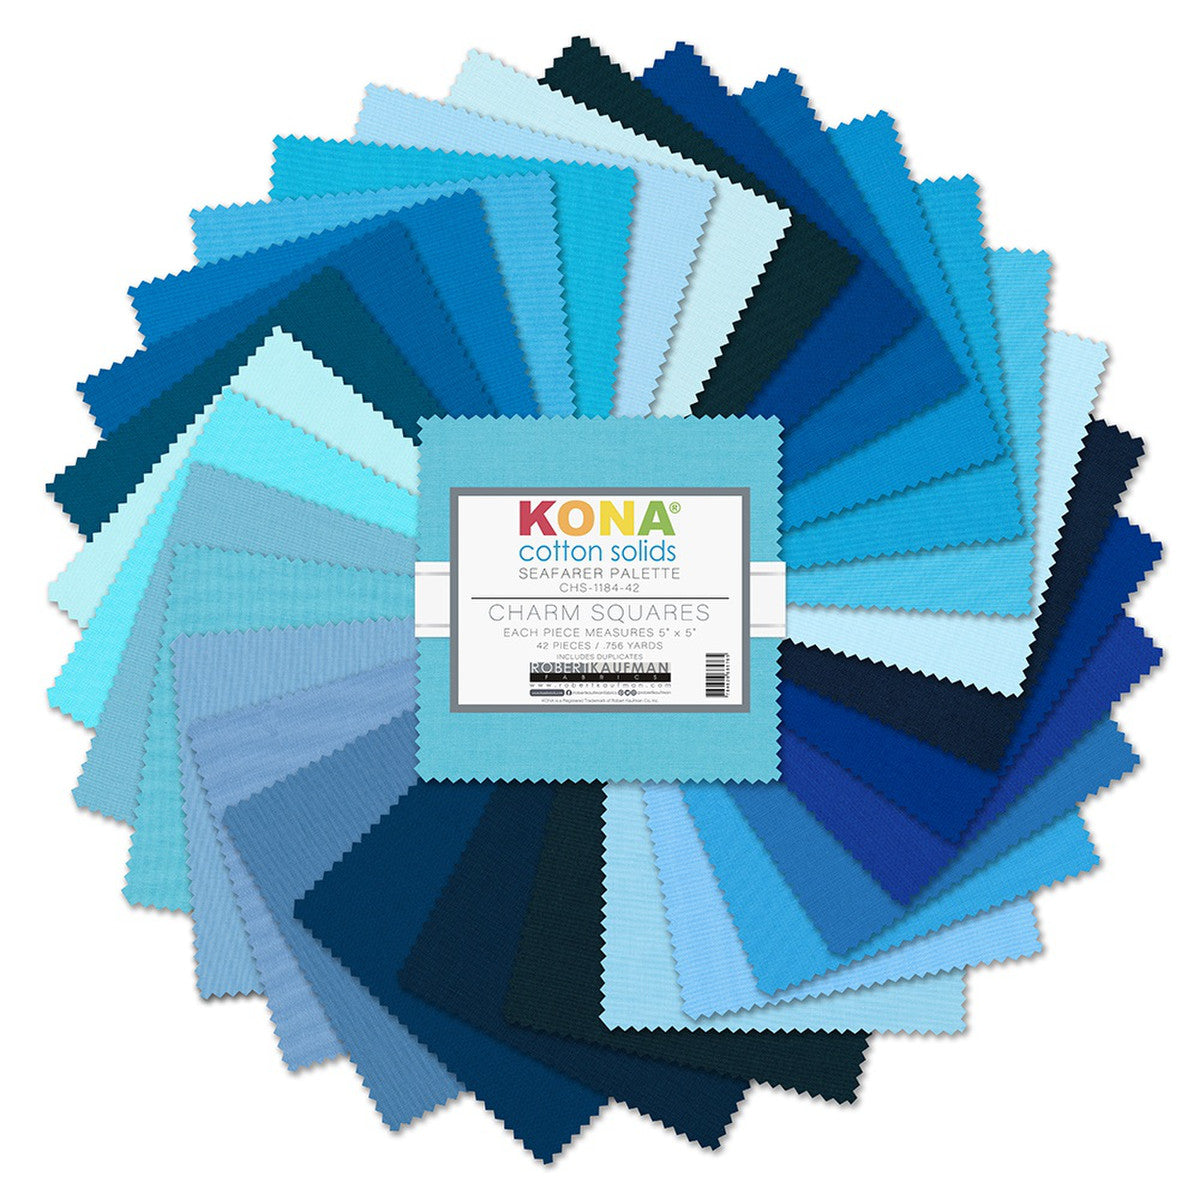 Seafarer Palette - Kona Cotton Solids 5"x5" Charm Squares